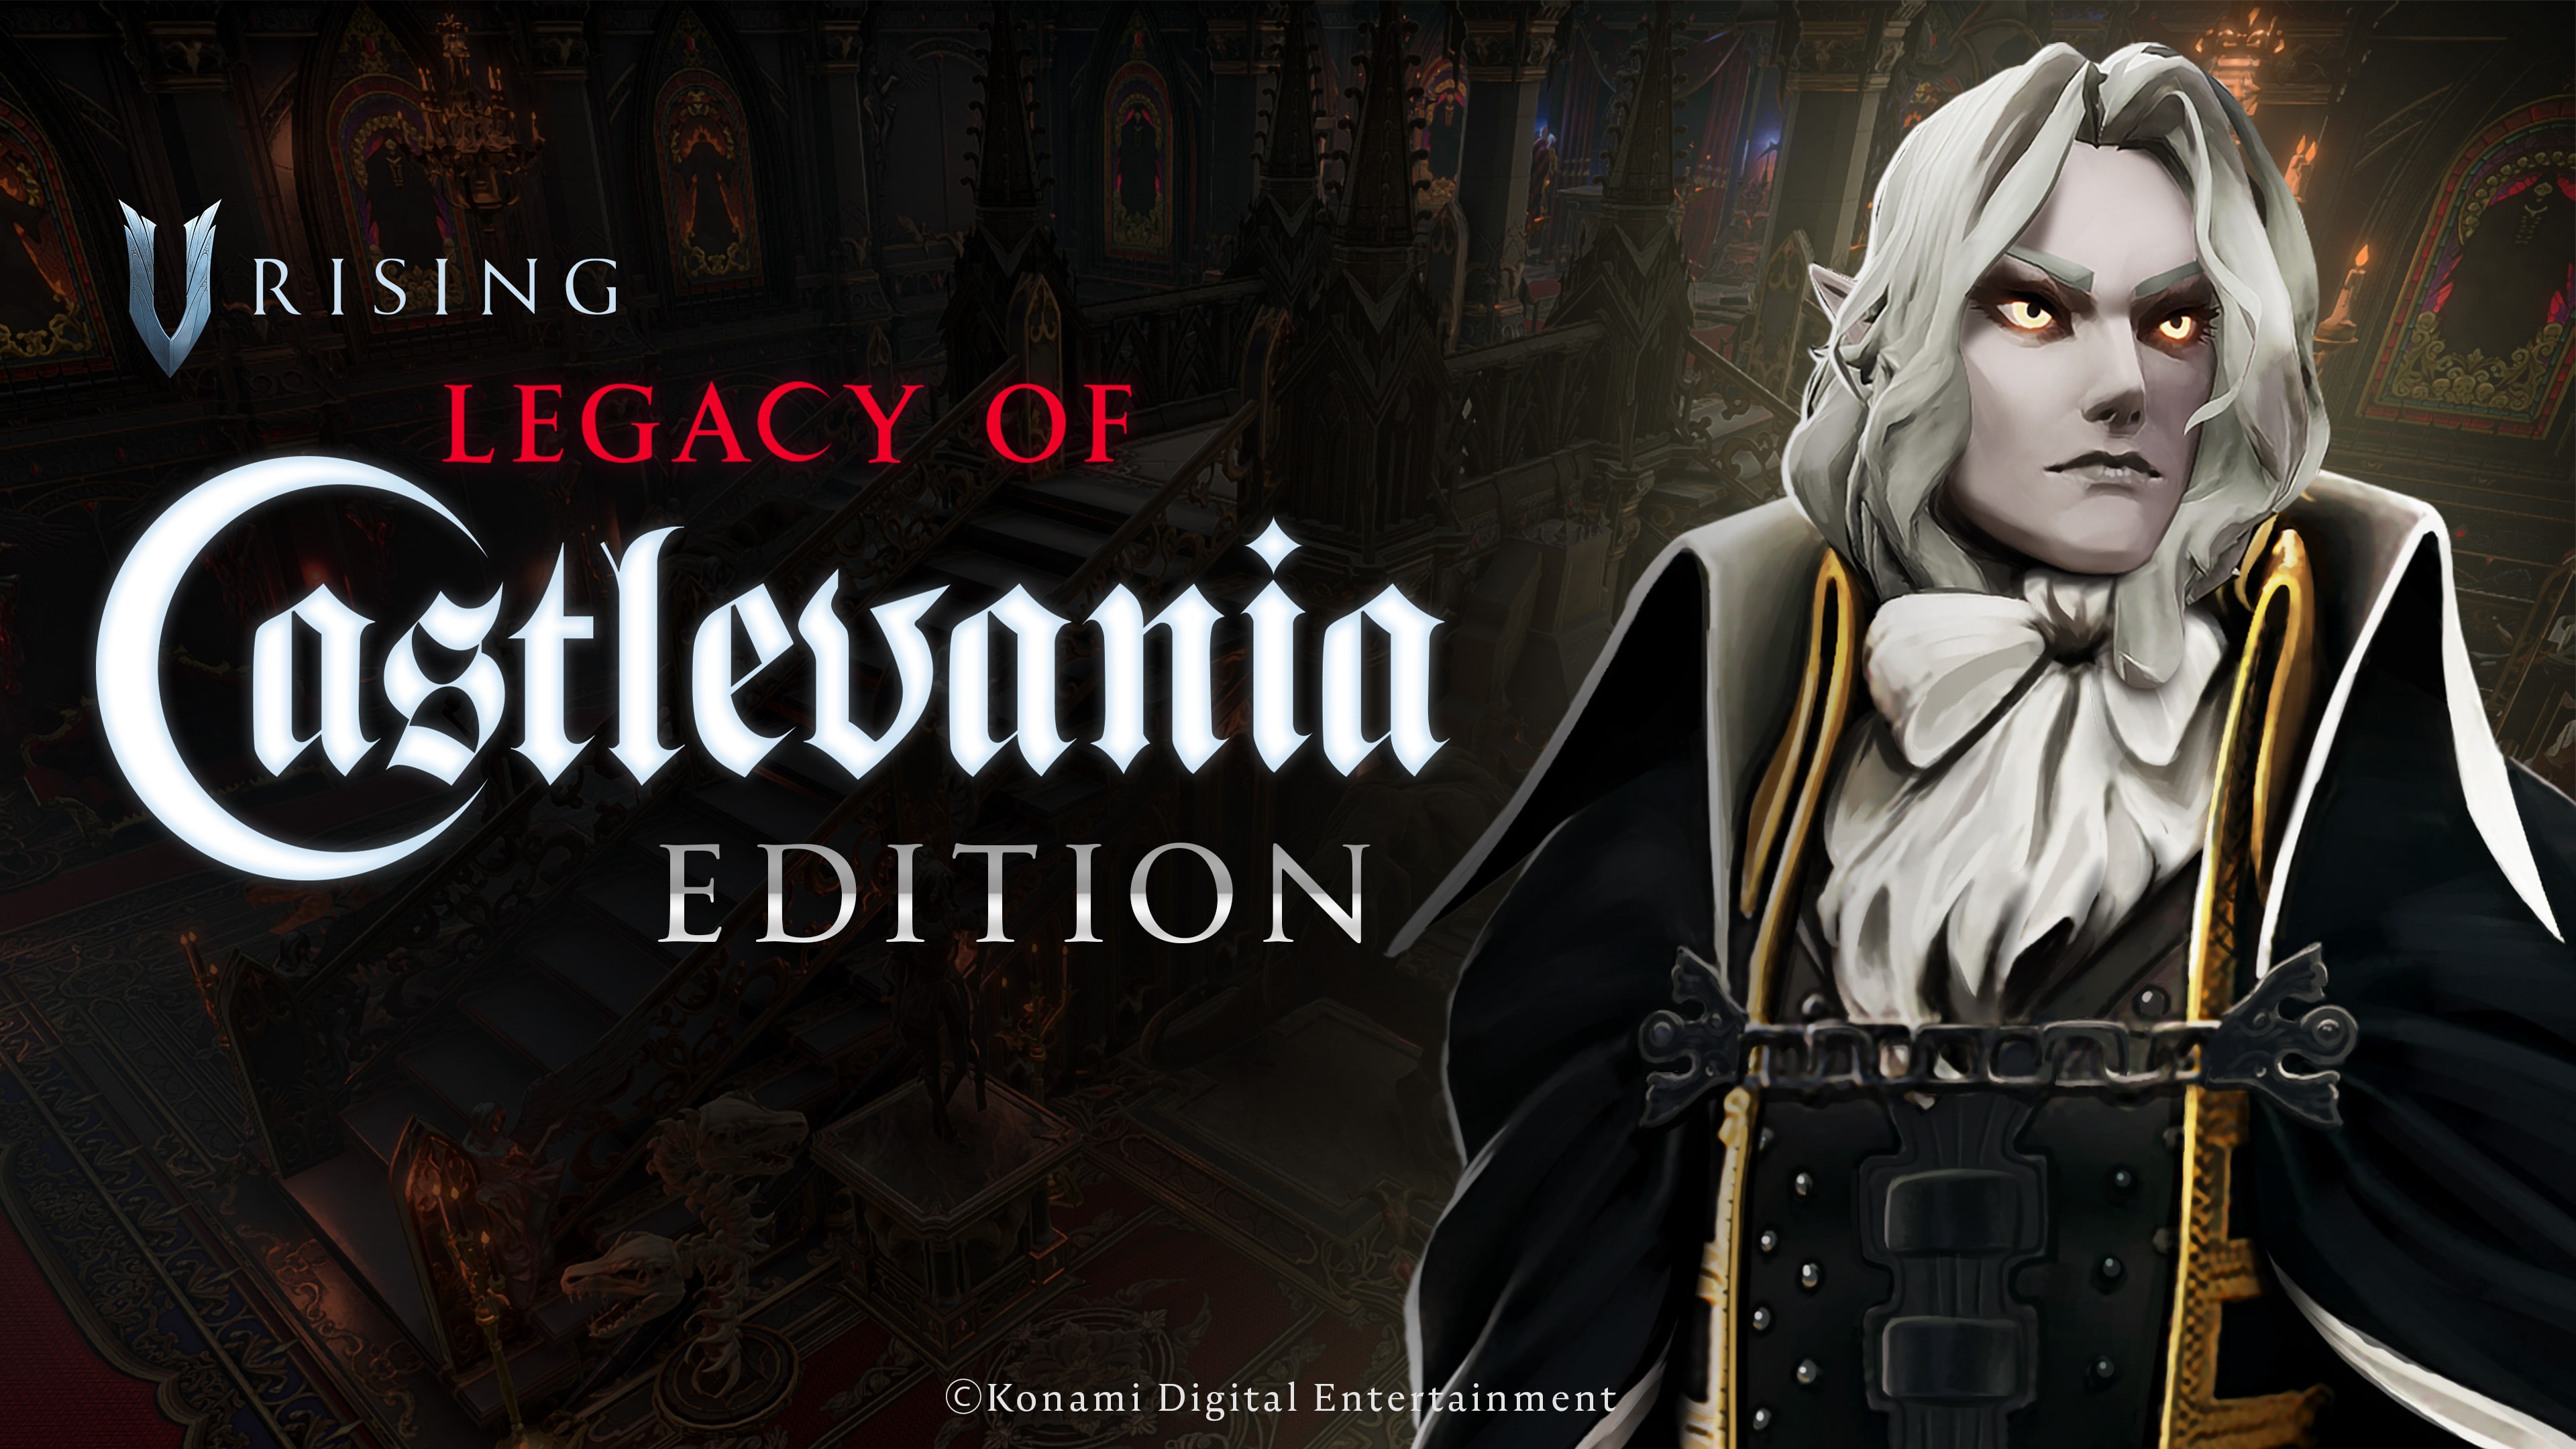 Legacy of Castlevania